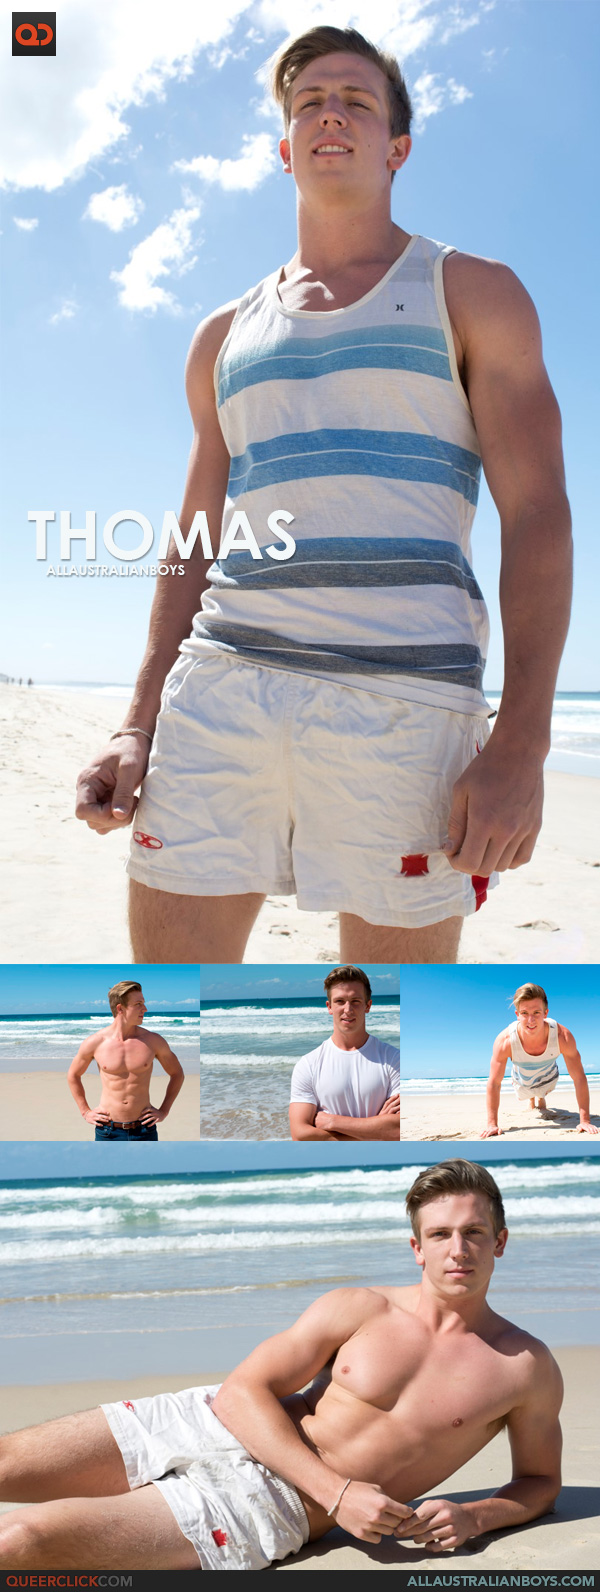 All Australian Boys: Thomas